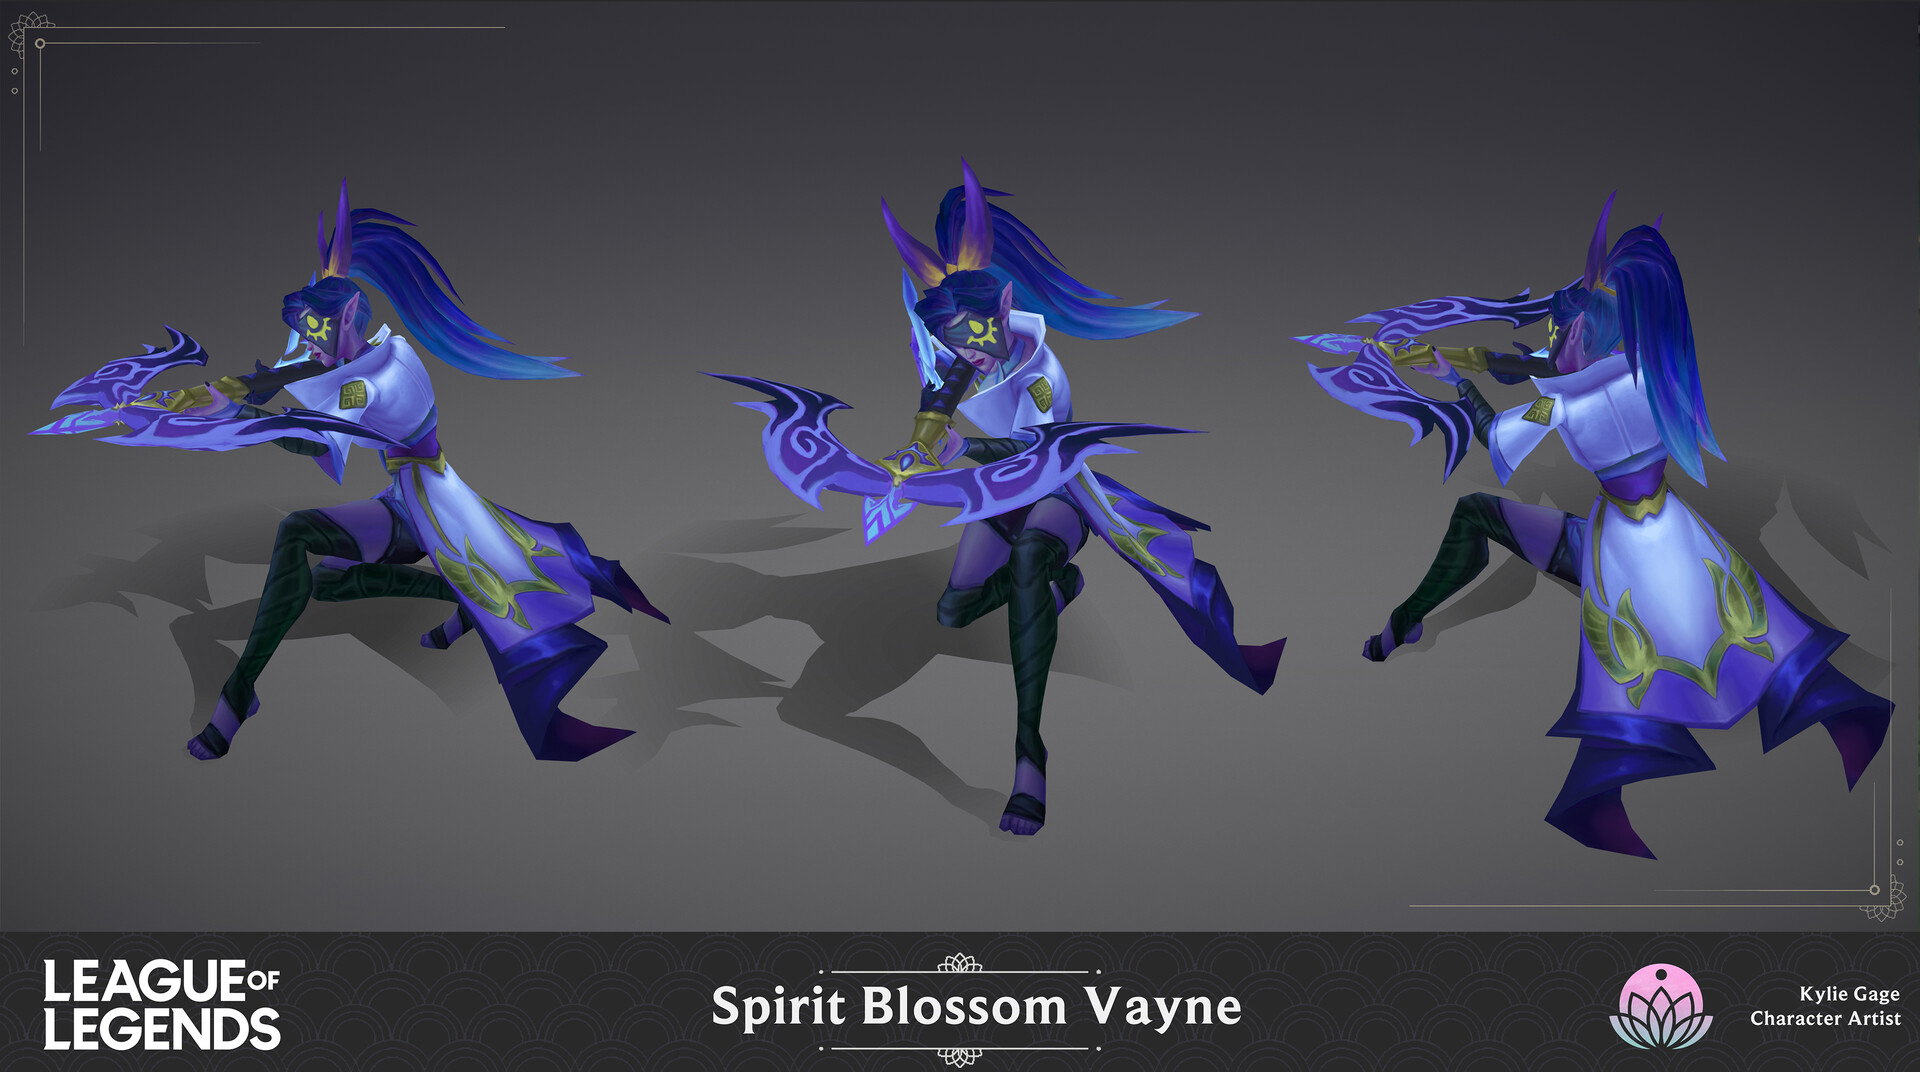 ArtStation - Headmistress Vayne [League of Legends Custom Skin]